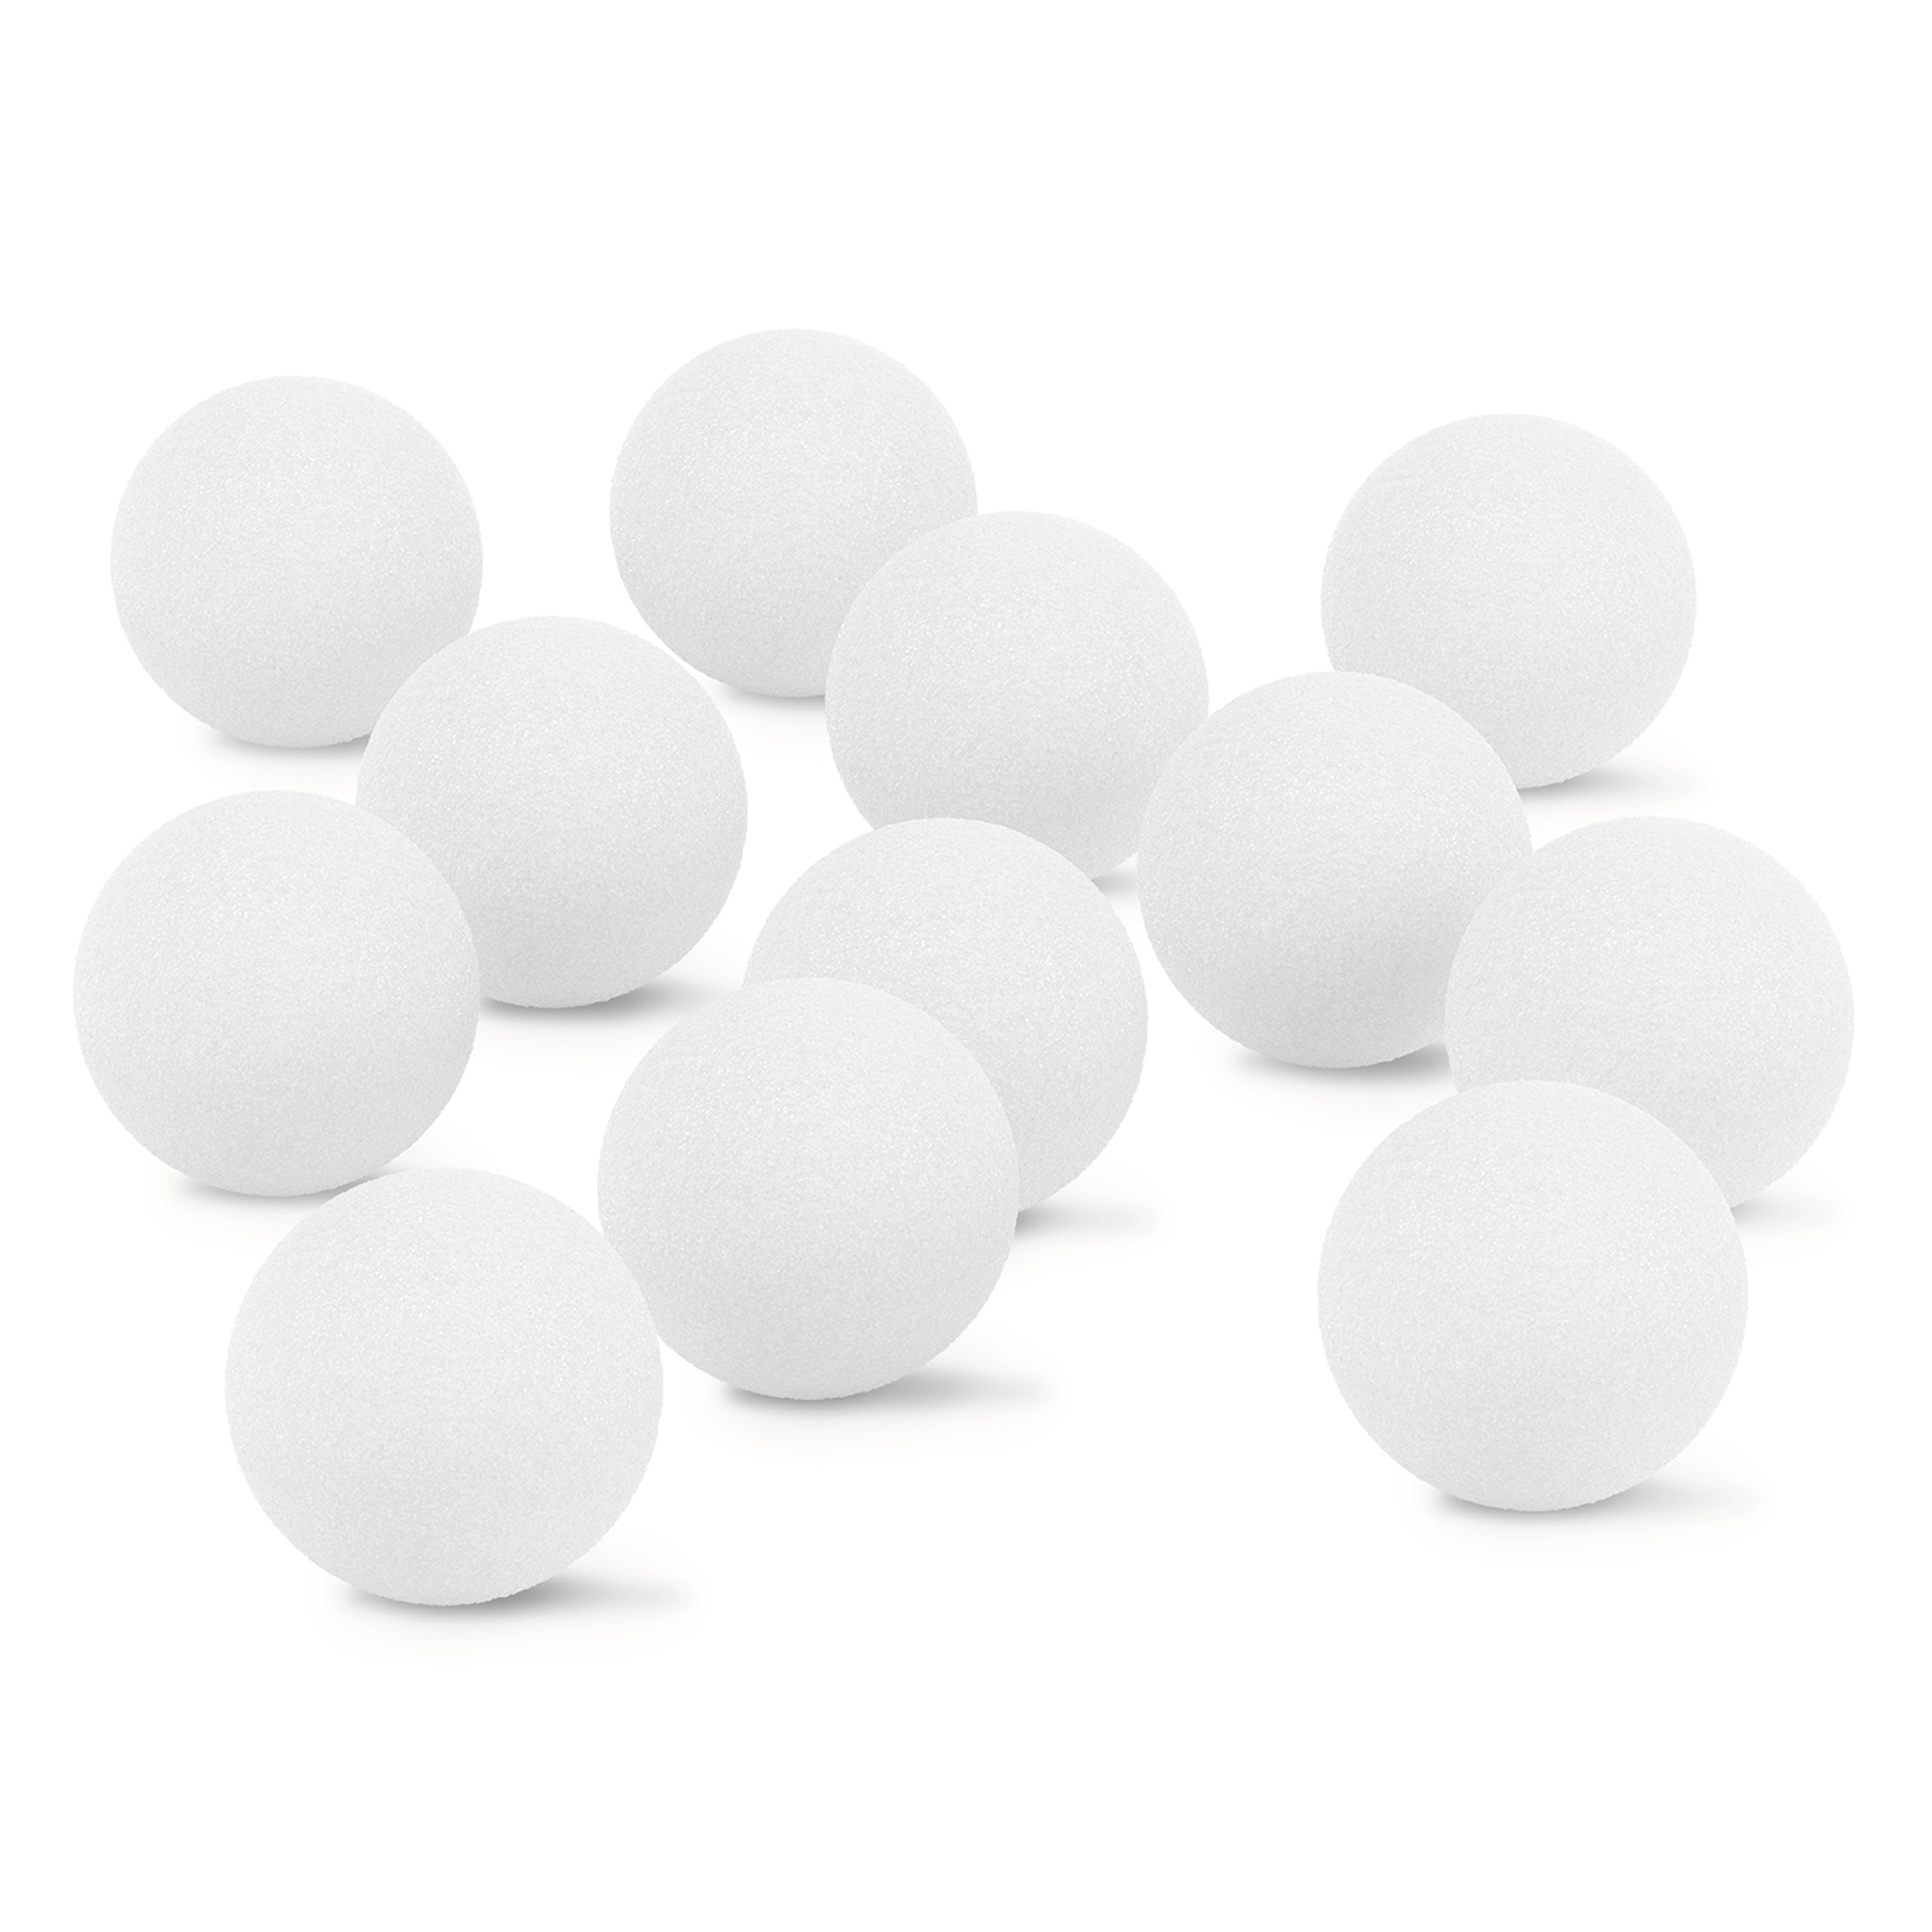 FloraCraft® CraftFōM Ball White